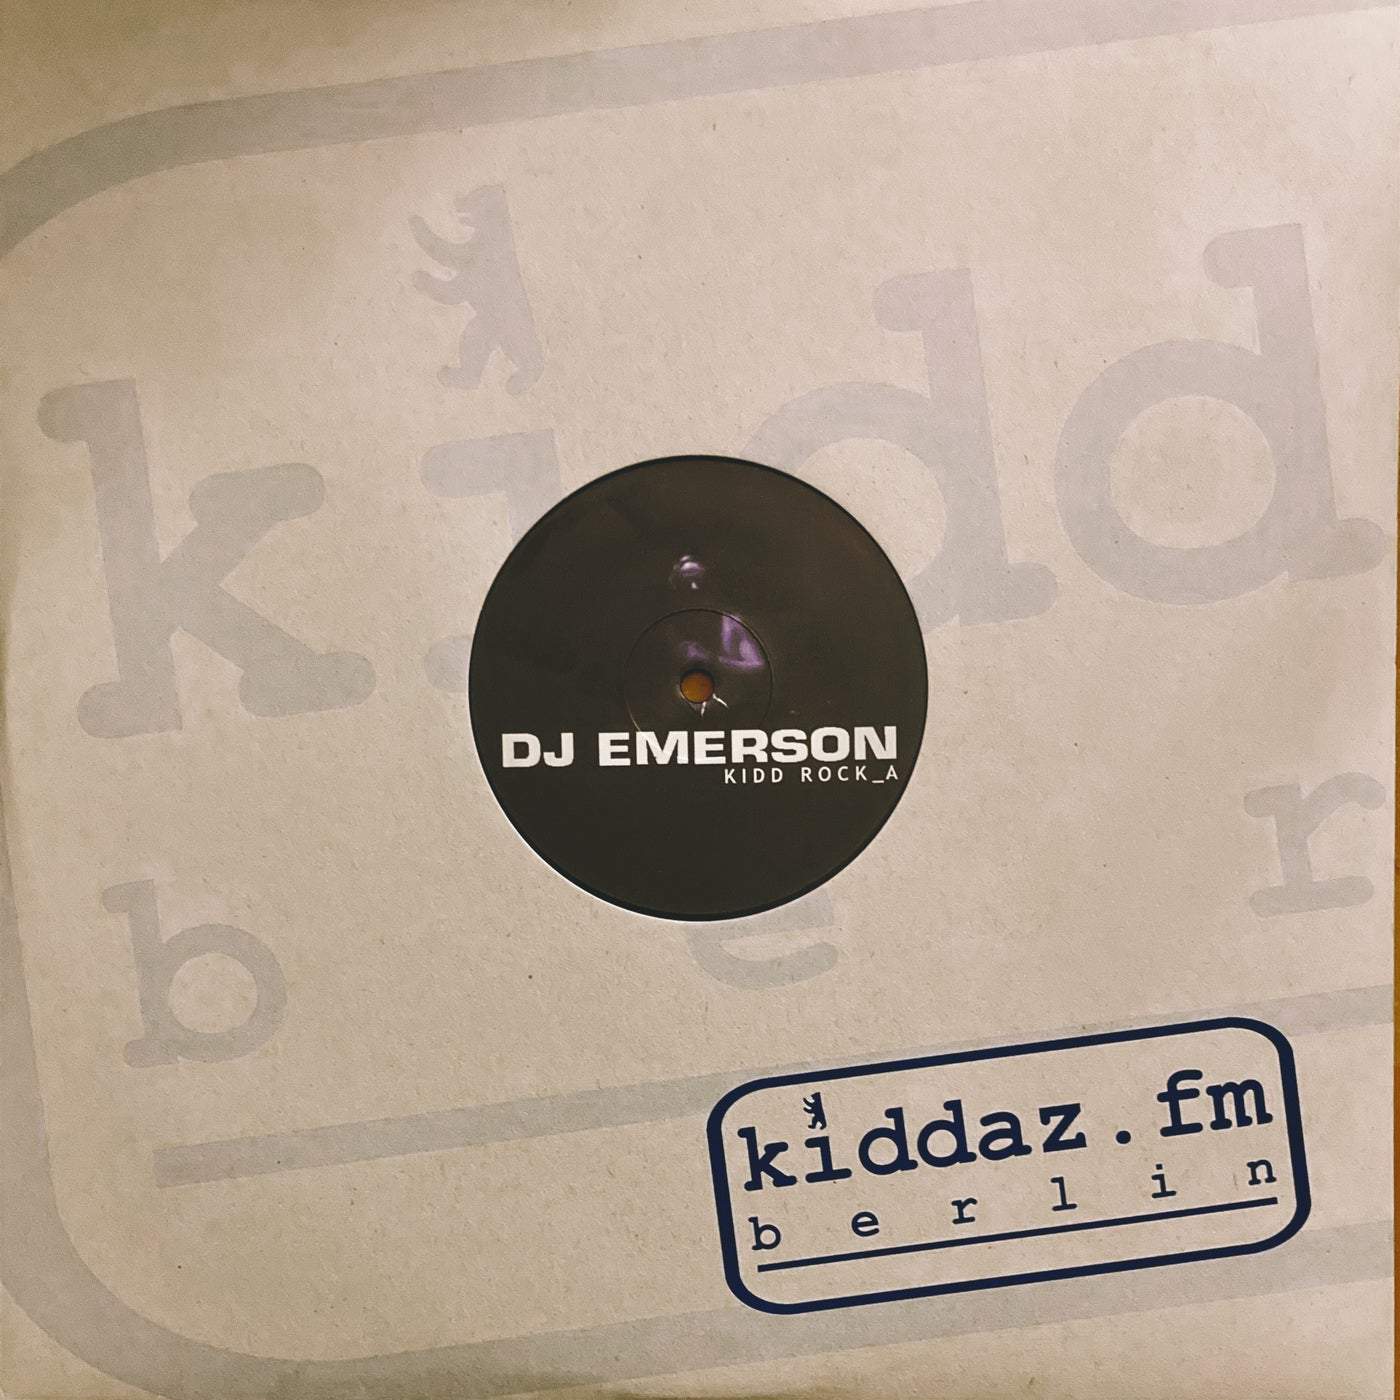 Download DJ Emerson - Kidd Rock (Remastered) on Electrobuzz